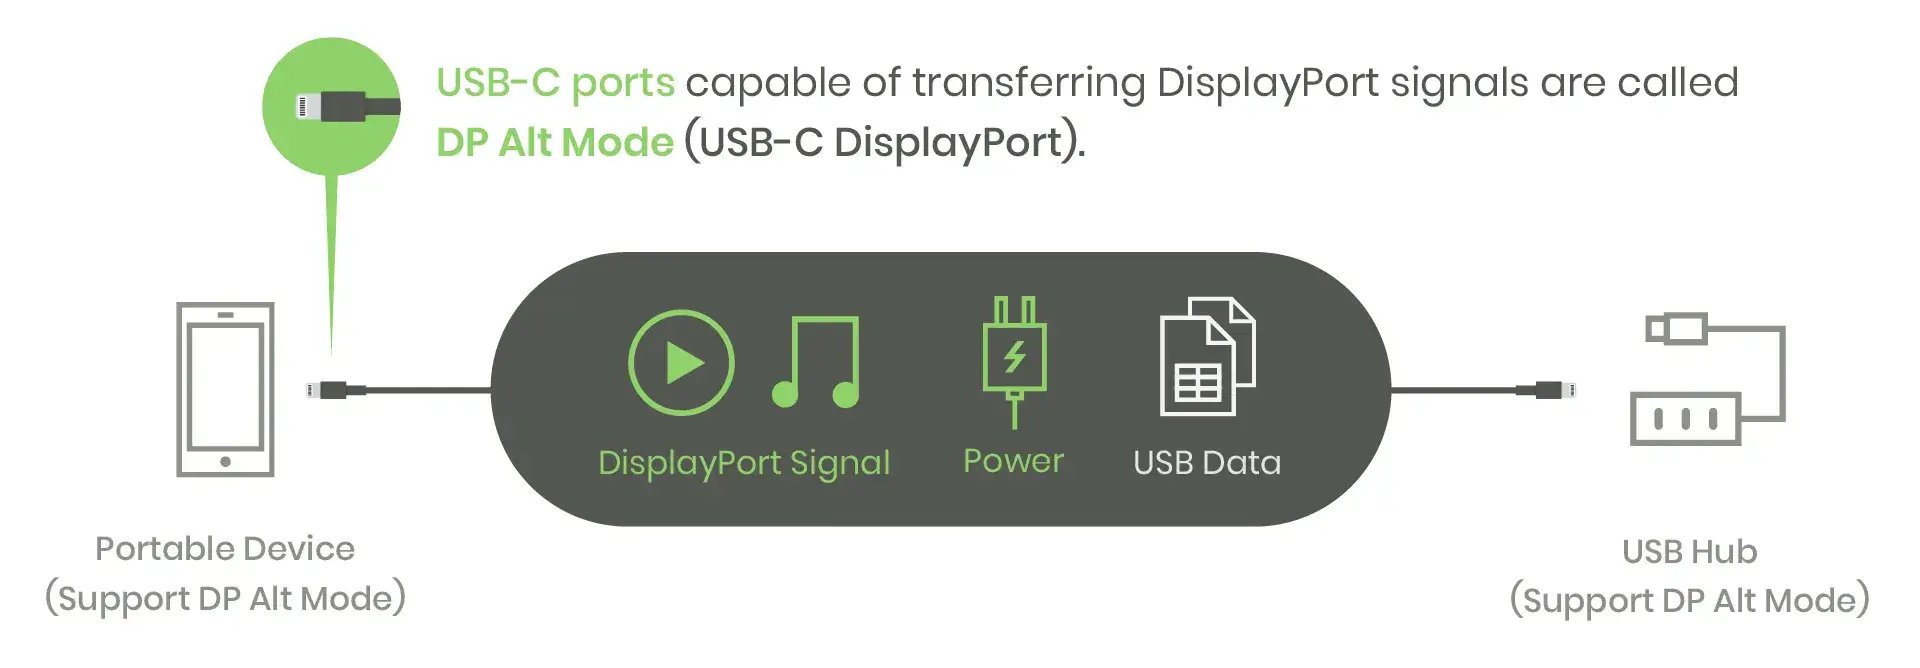 sct-displayport-vs-hdmi-7-usbtc-dp-alt-mode